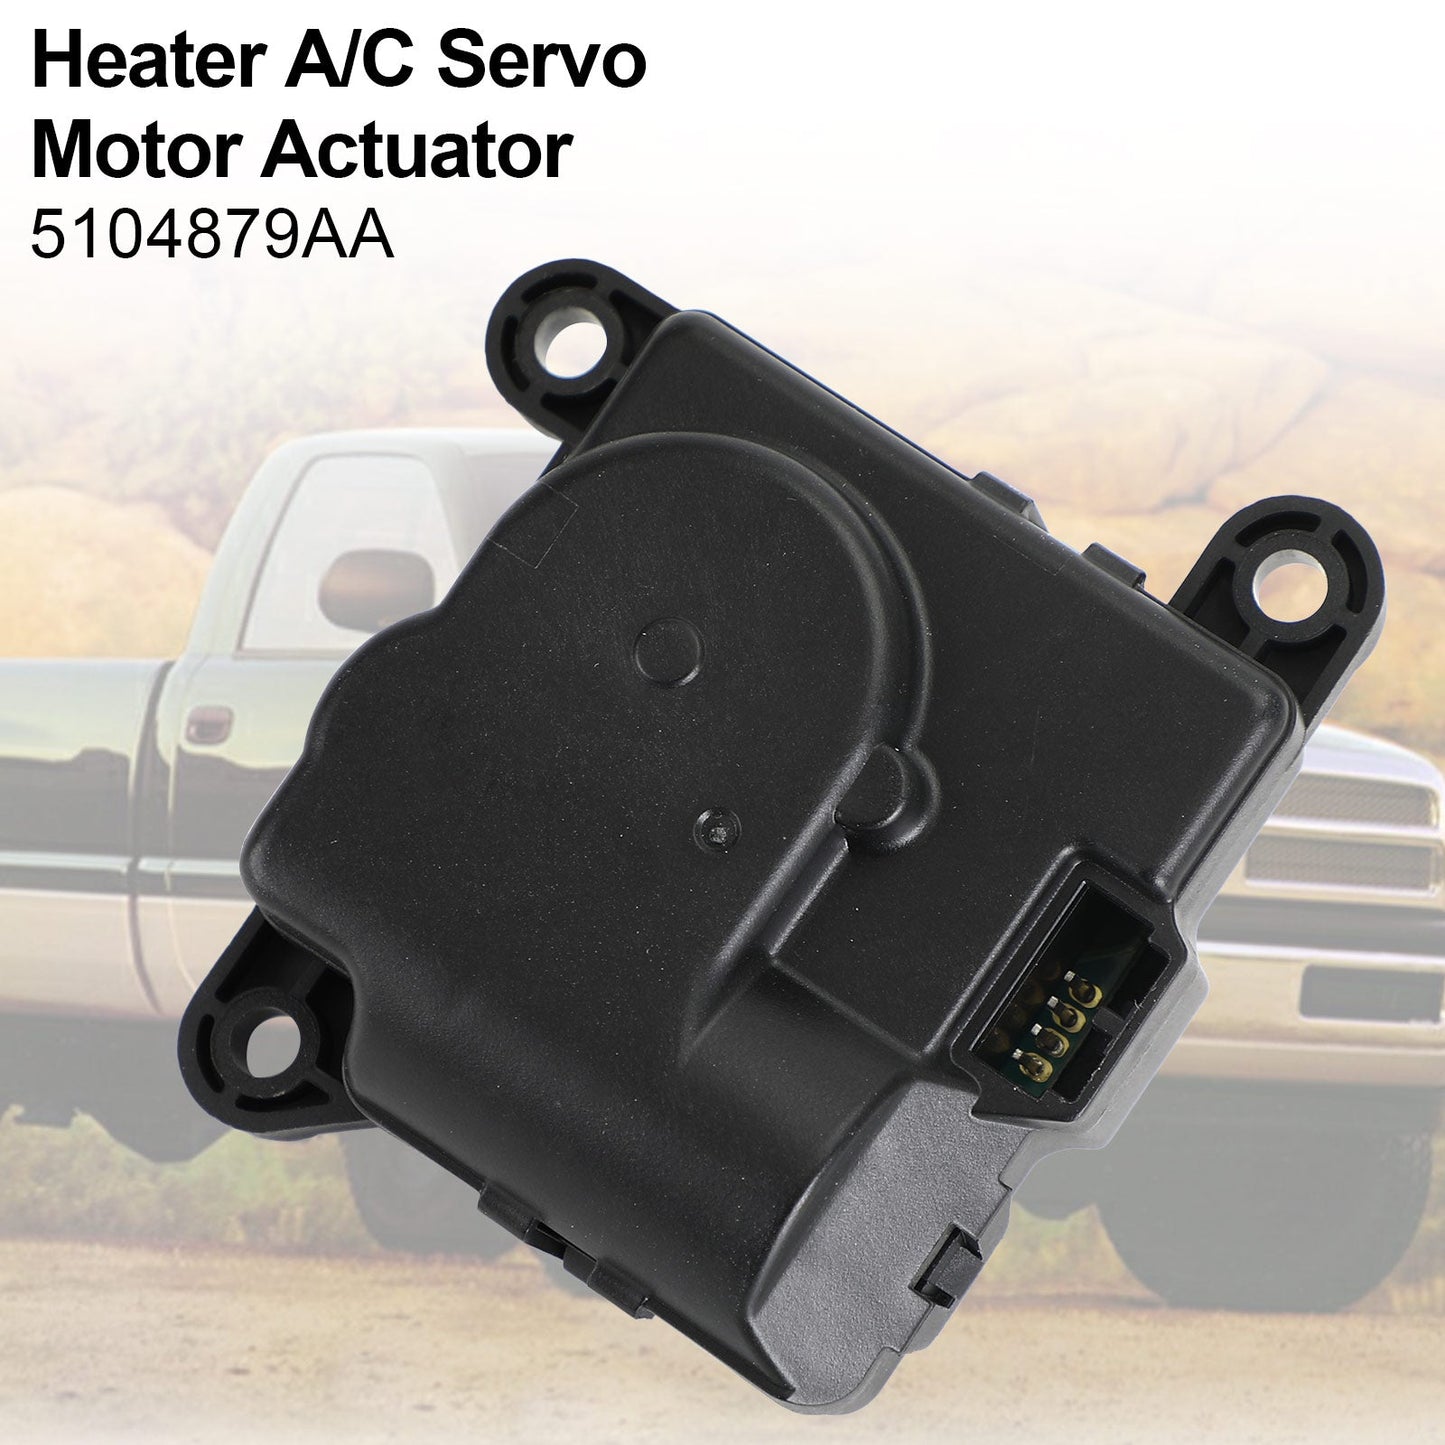 Heater A/C Servo Motor Actuator For Dodge Ram 1500 2500 3500 1999-2002 5104879AA